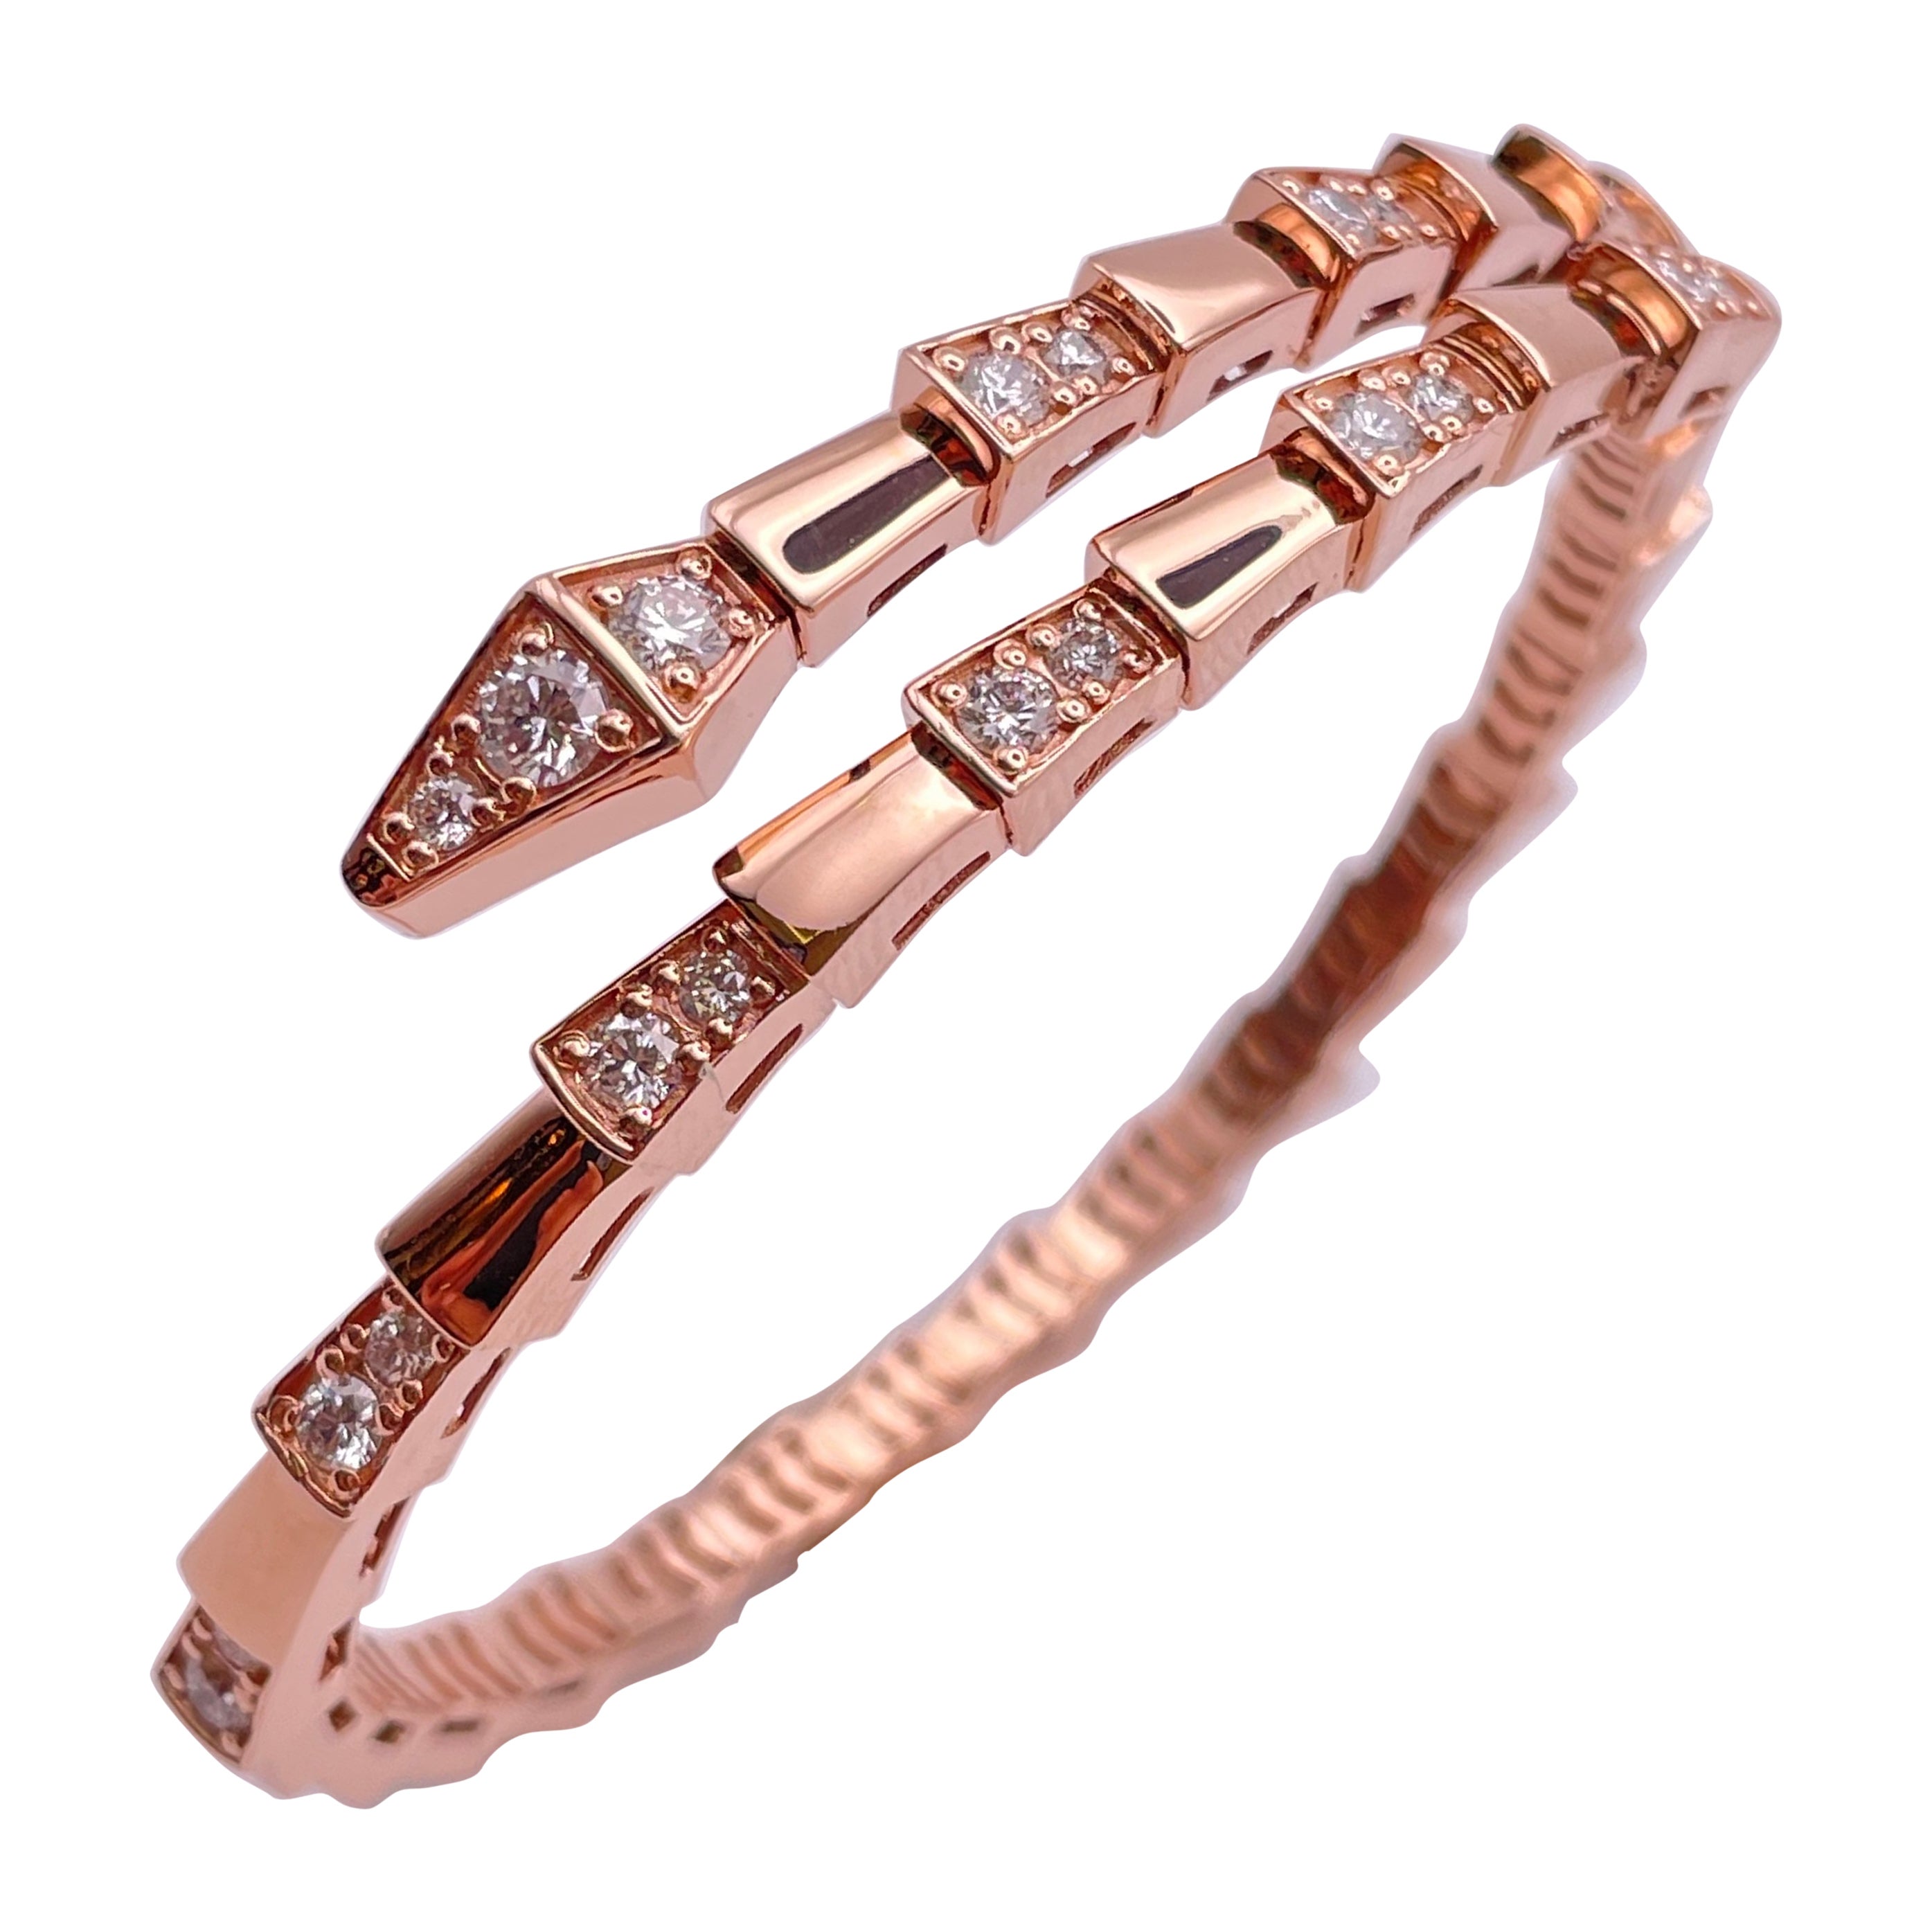 Rose Gold Snake Viper Bracelet with 1.85ct Diamonds For Sale